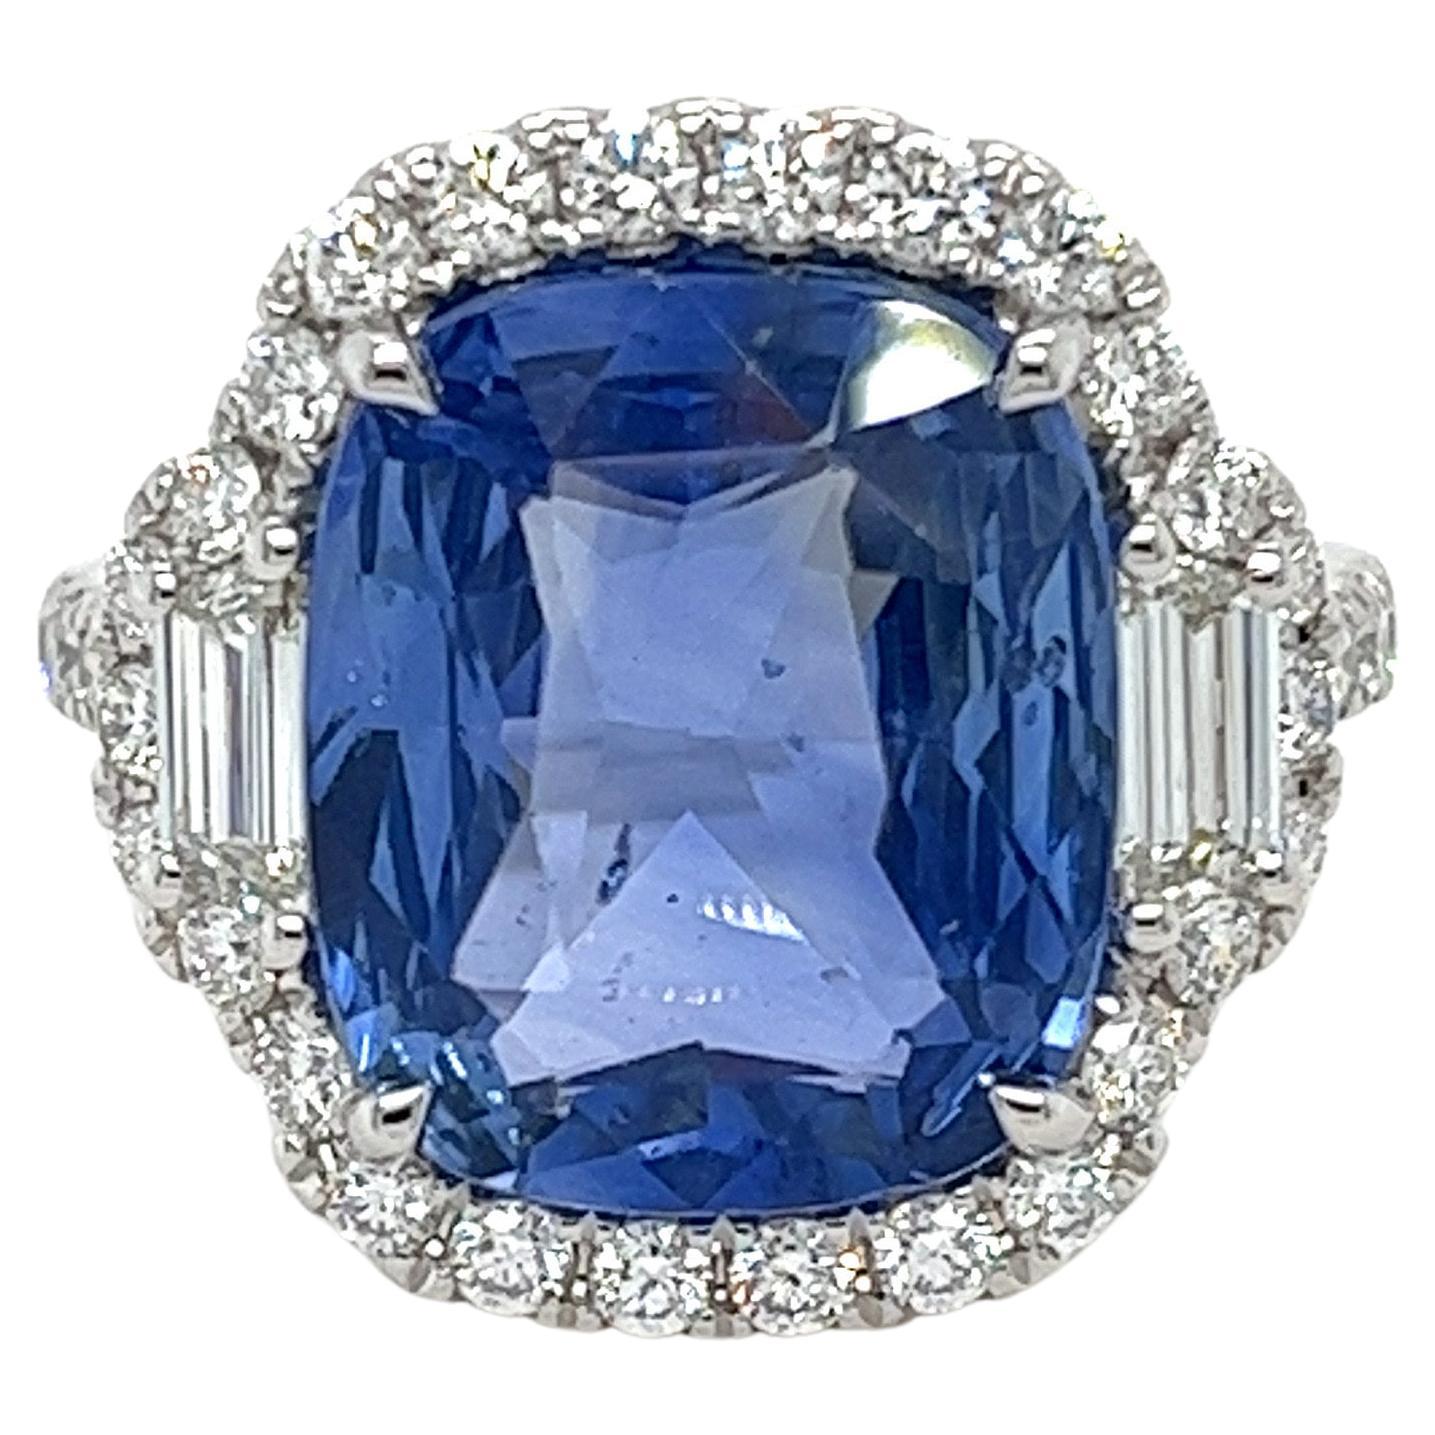 Certified 8.05 Carat Ceylon Sapphire & Diamond Ring in 18 Karat White Gold